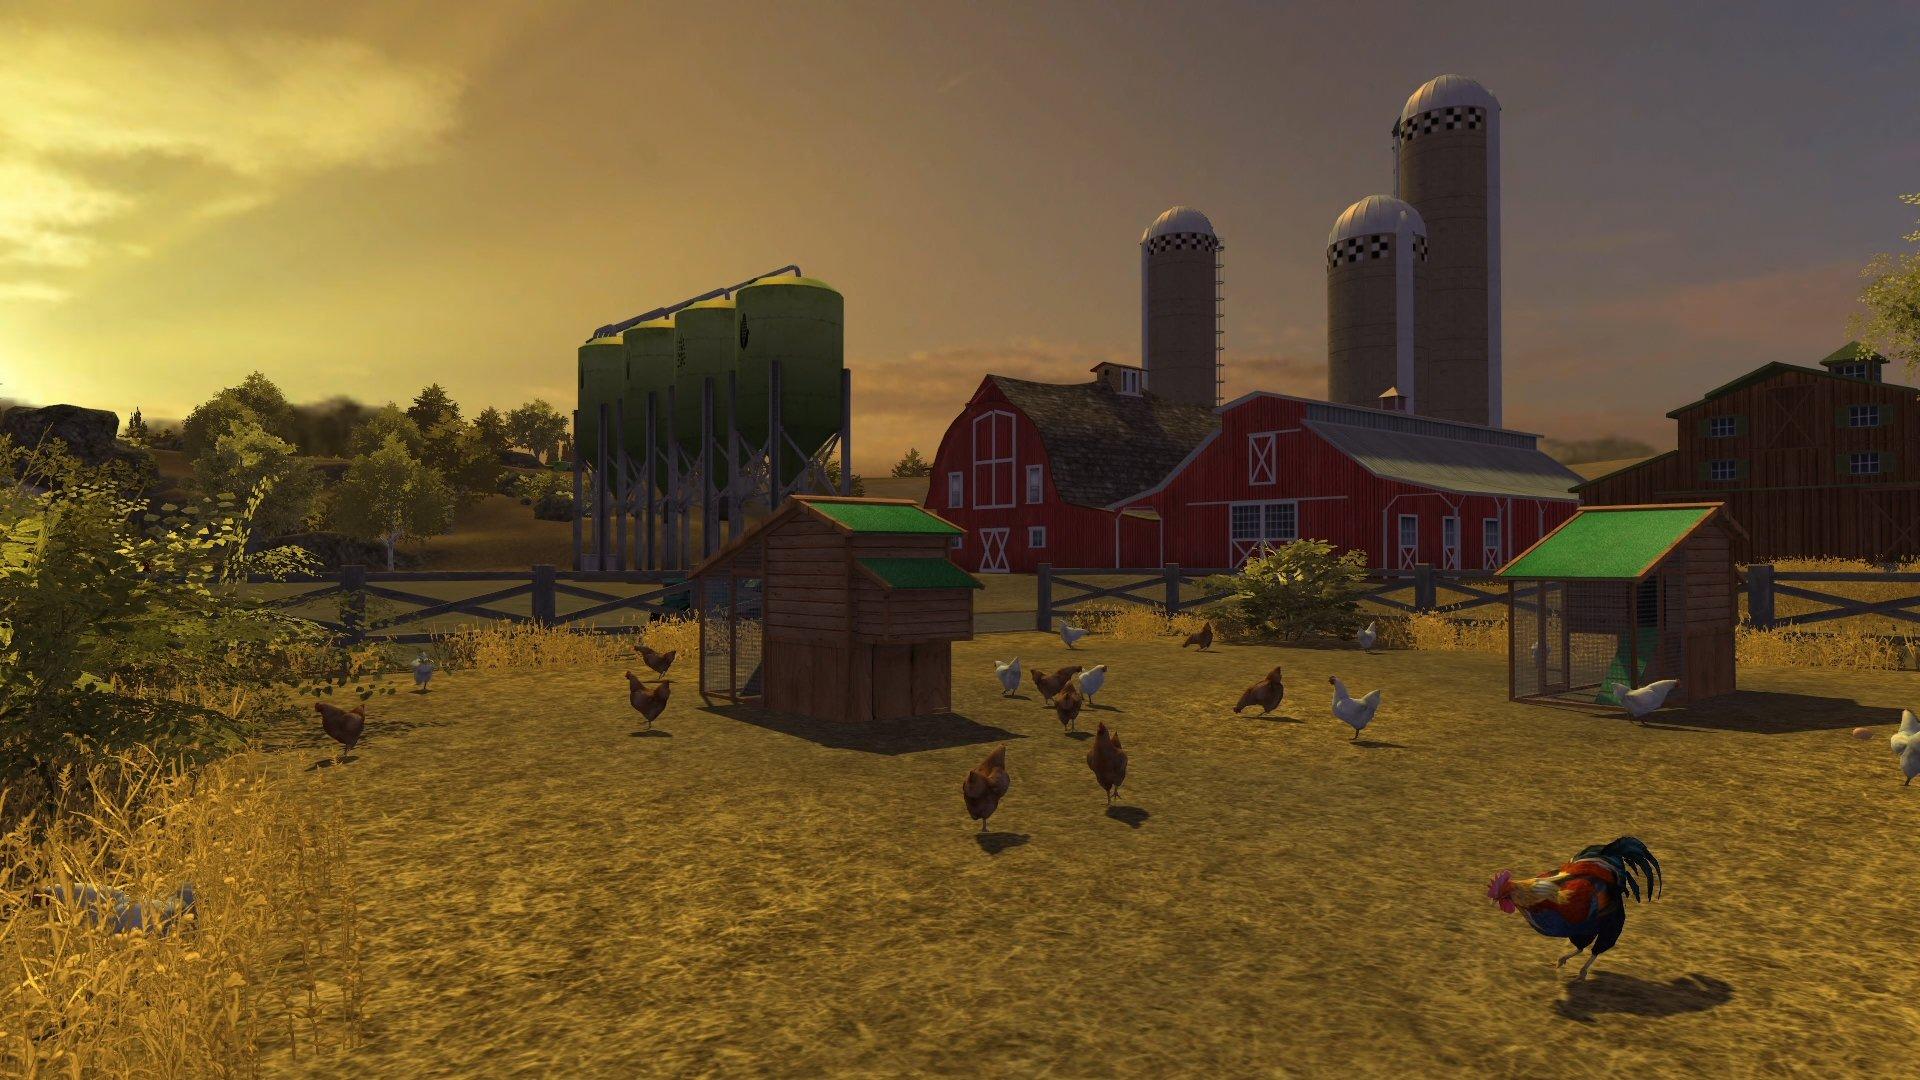 Farming Simulator - PlayStation 3, PlayStation 3